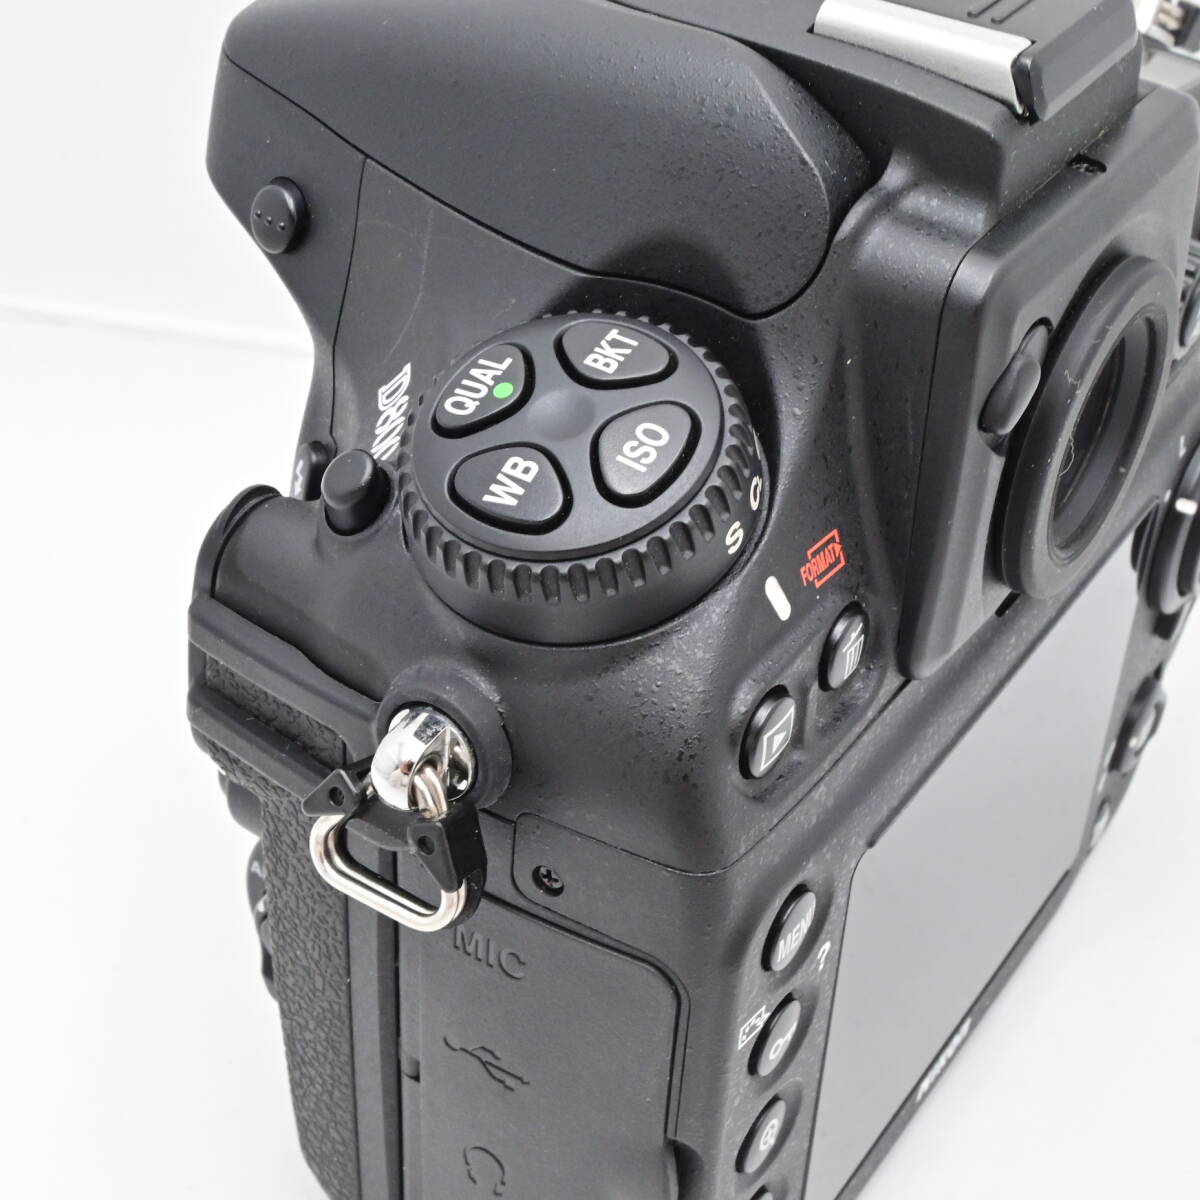 Nikon デジタル一眼レフカメラ D800 ボディー D800_画像9